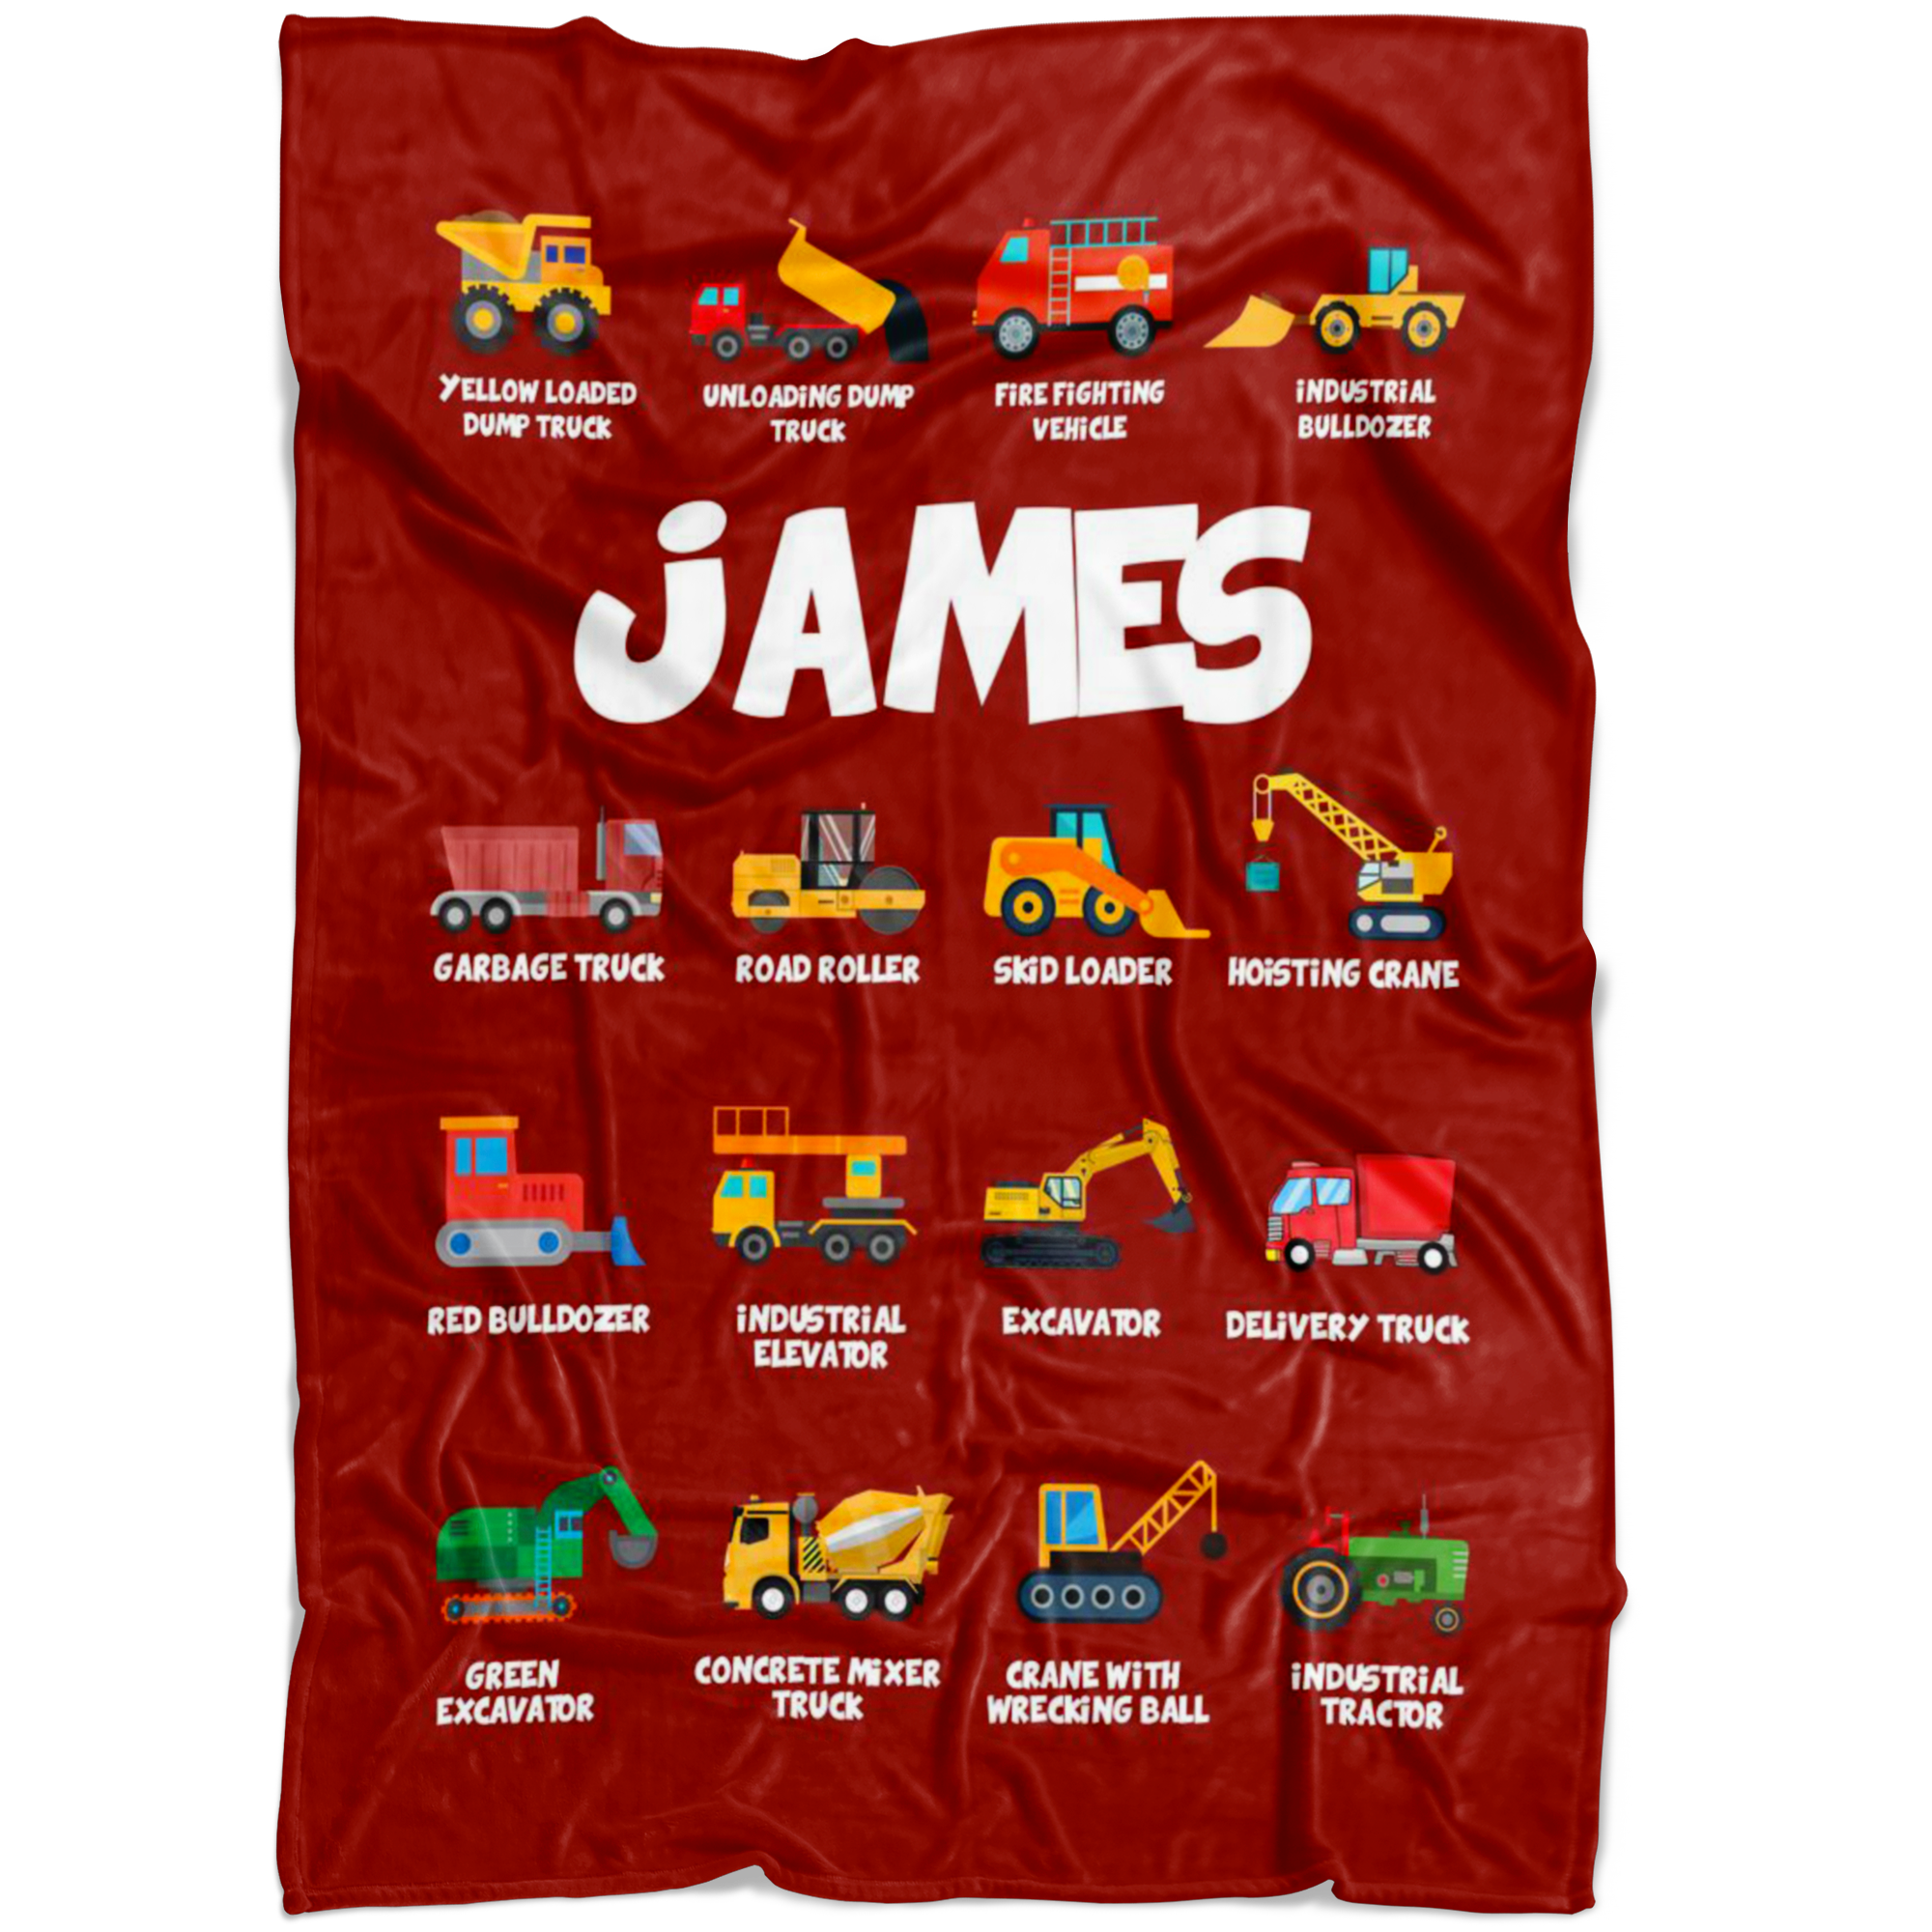 James Construction Blanket Red